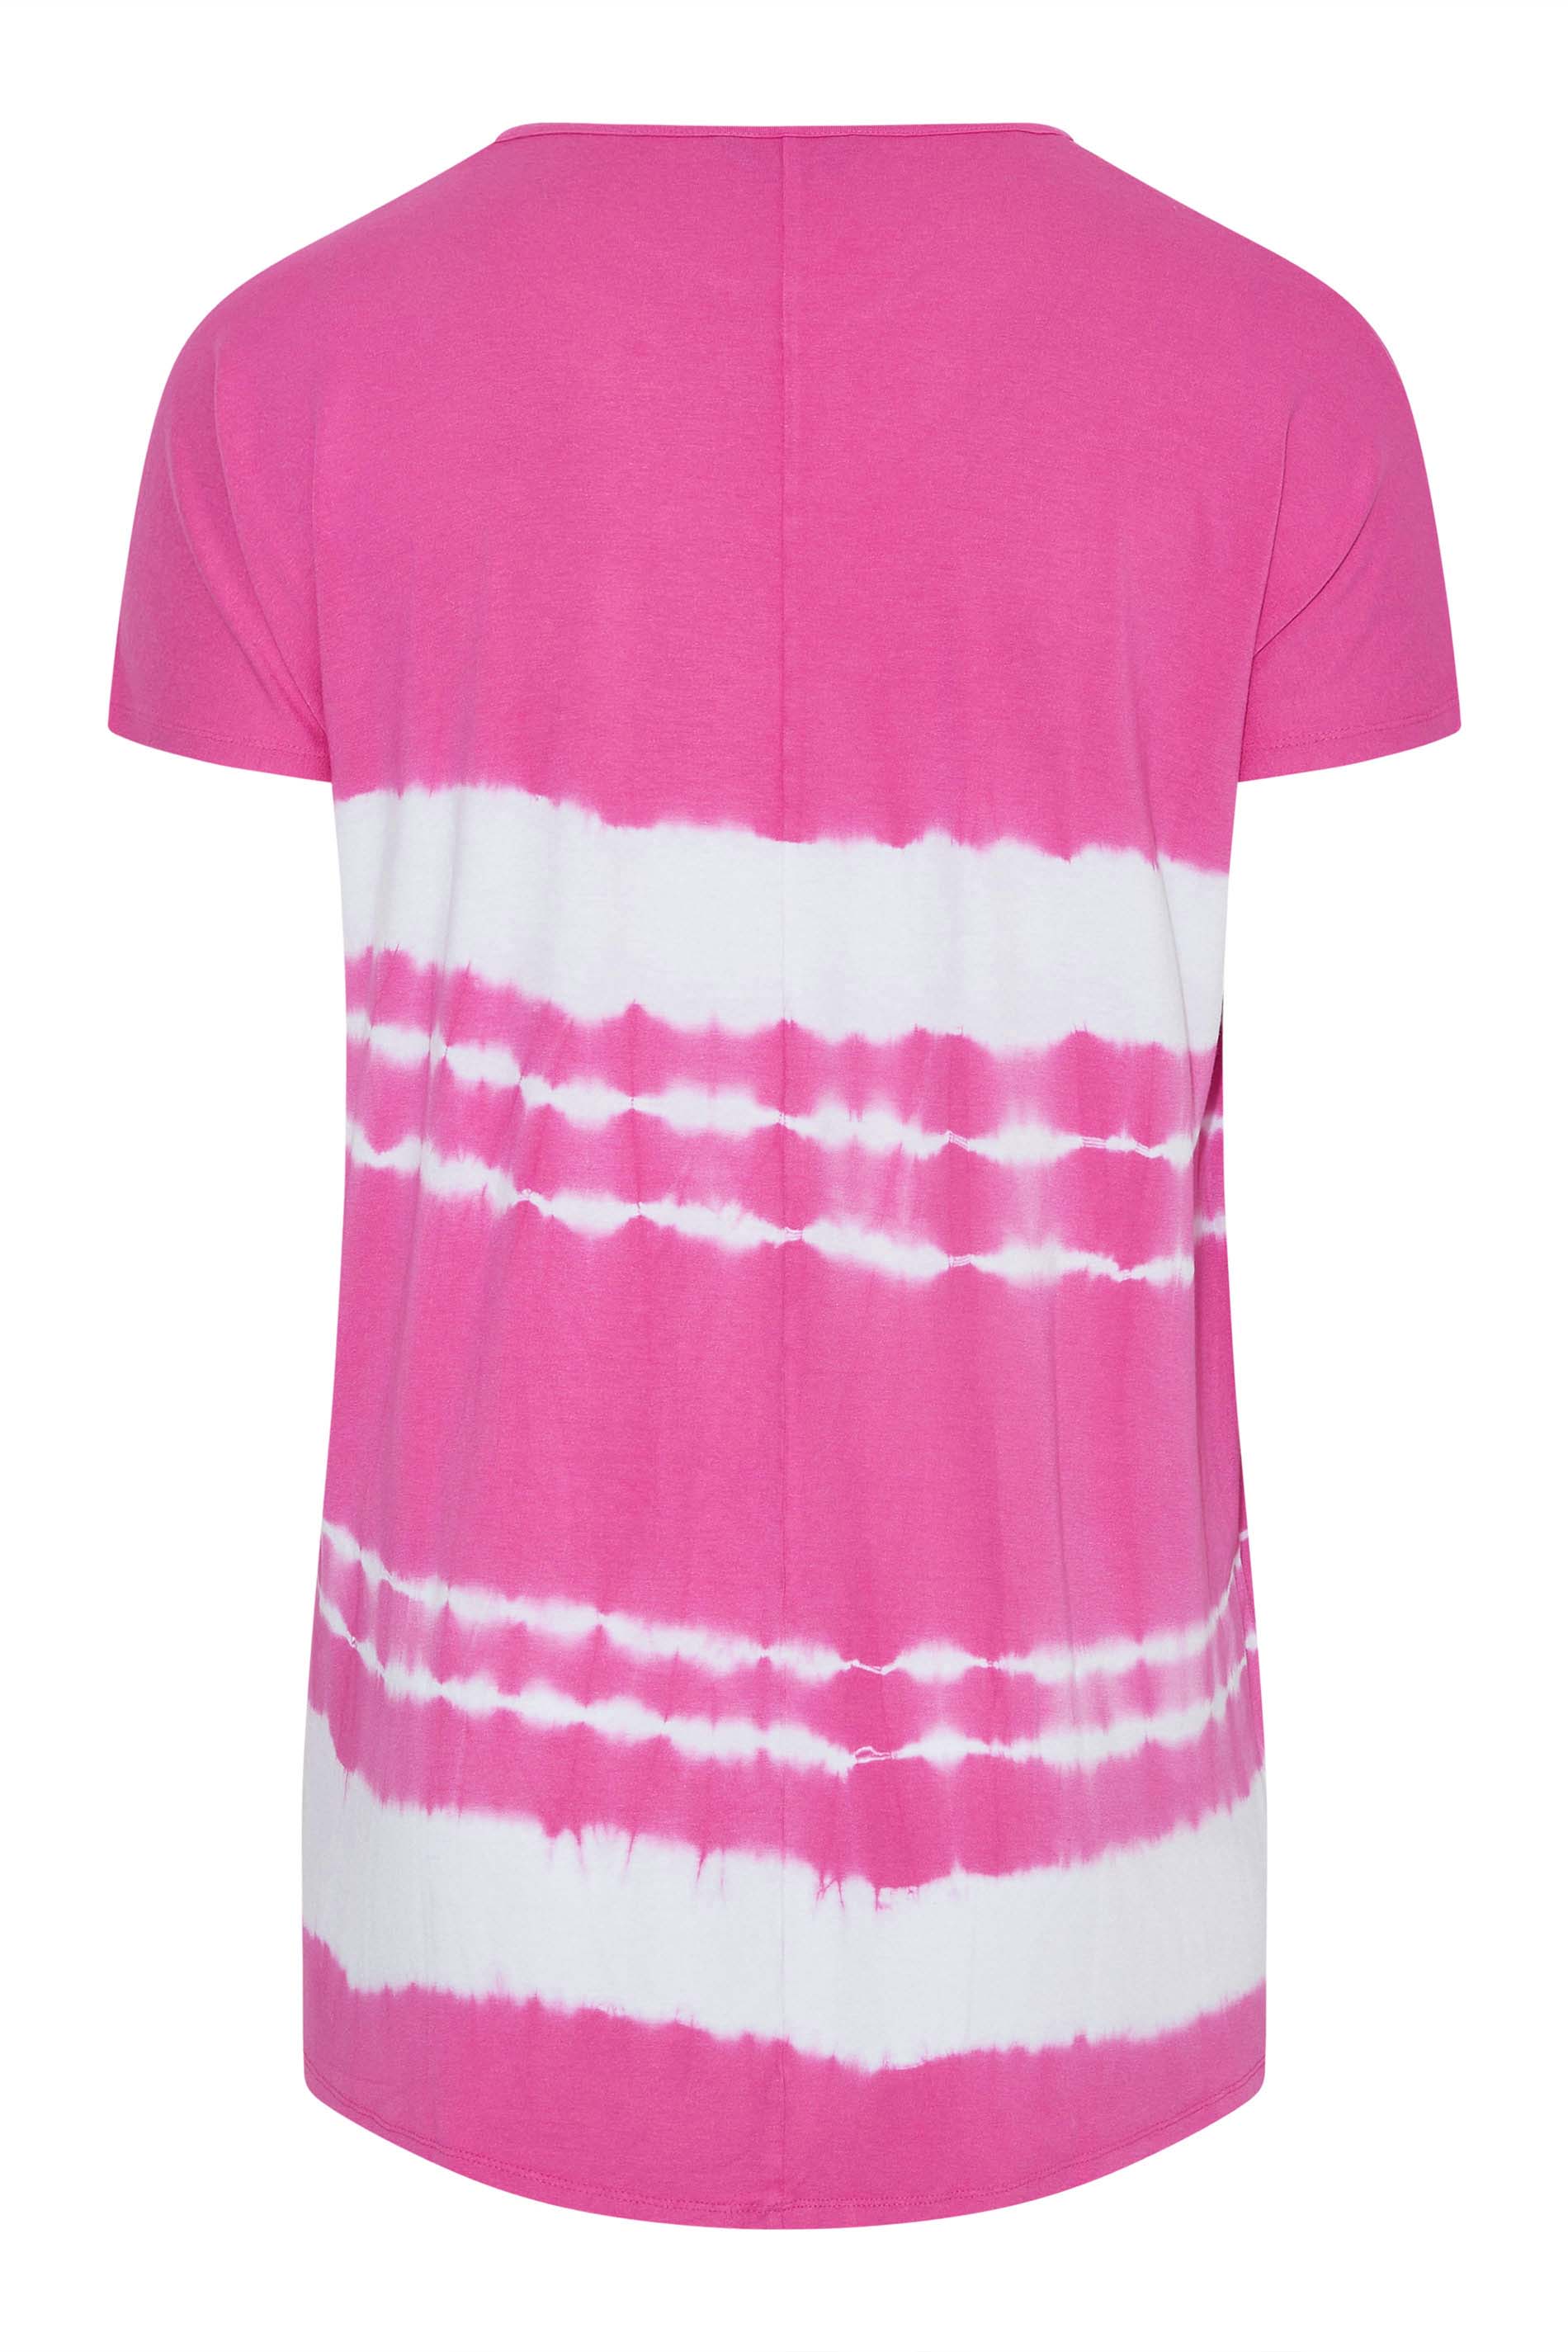 Grande taille  Tops Grande taille  T-Shirts | T-Shirt Rose Tie & Dye en Jersey - IO49169